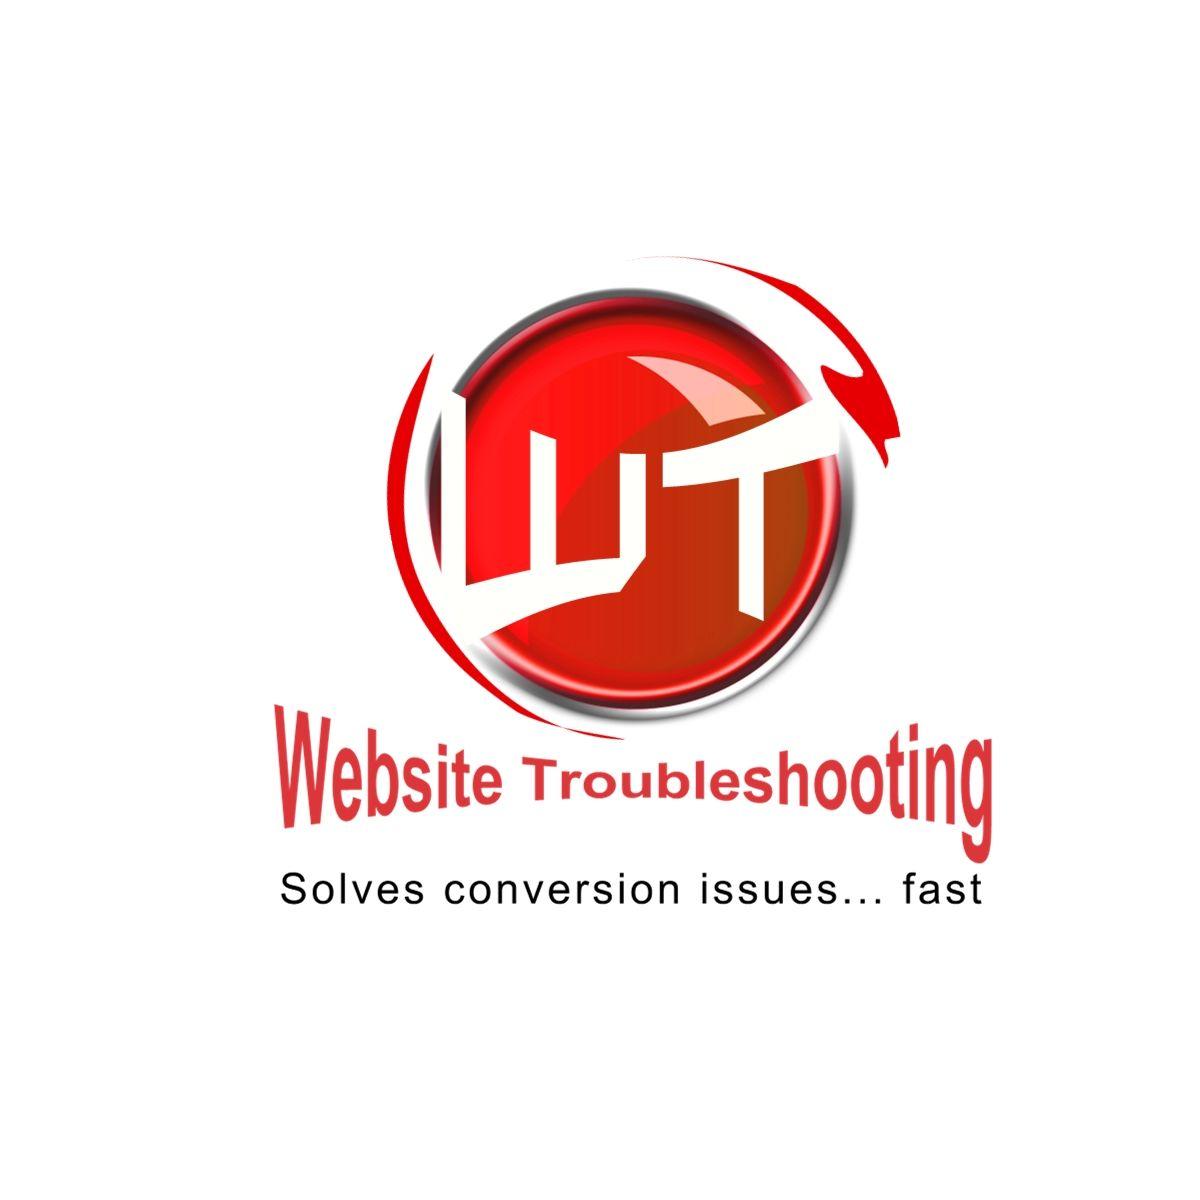 Burra Logo - Logo Design for website troubleshooting solves conversion issues ...